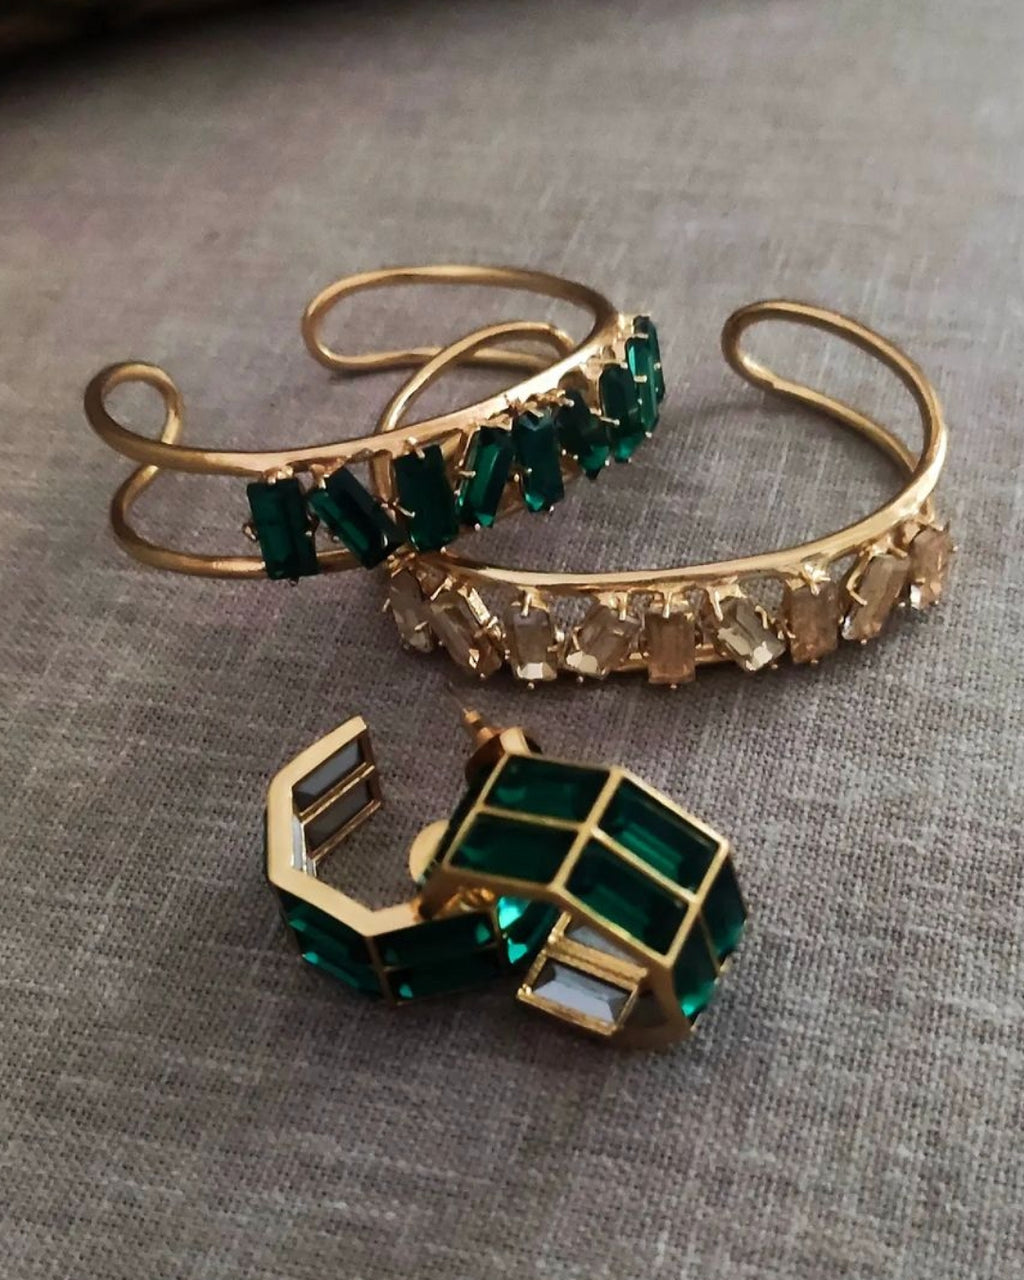 Amaana Emerald Cuff - Bracelets & Cuffs - Handcrafted Jewellery - Made in India - Dubai Jewellery, Fashion & Lifestyle - Dori